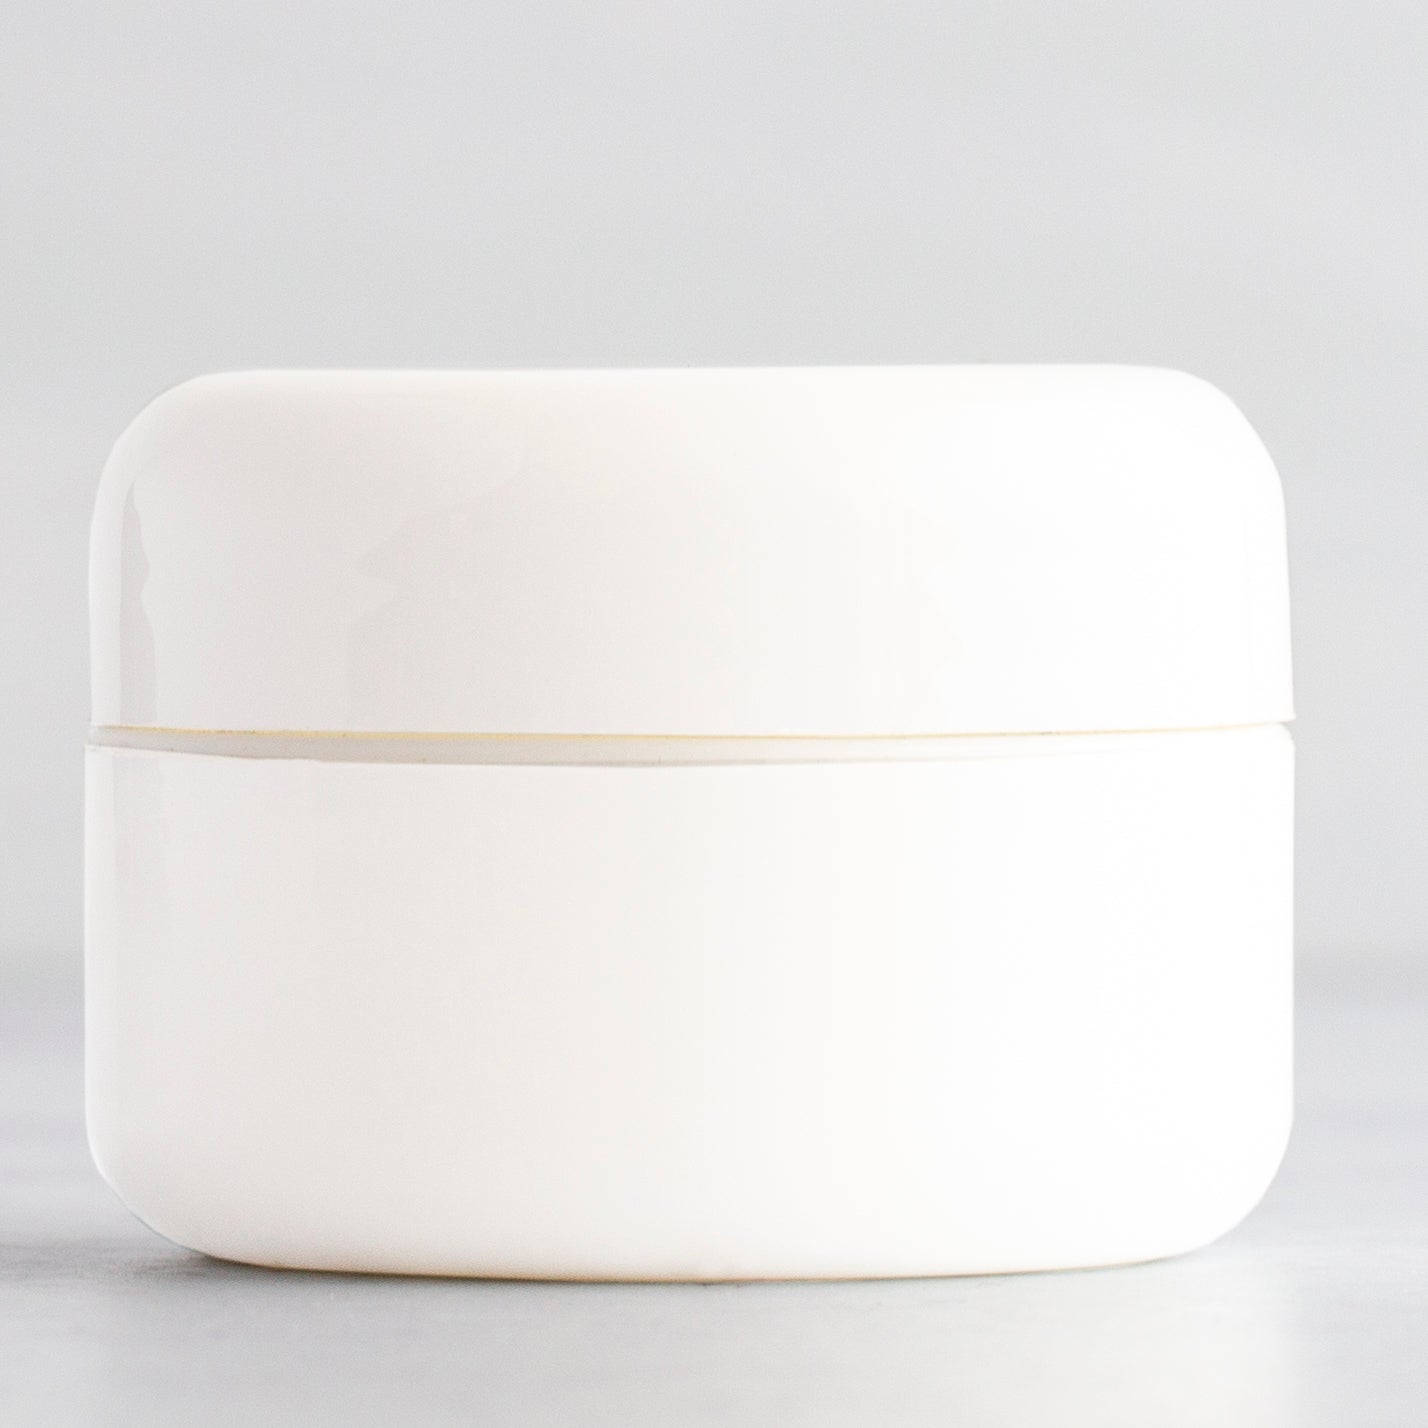 0.5 oz White Round Base Plastic Jar with White Dome Cap